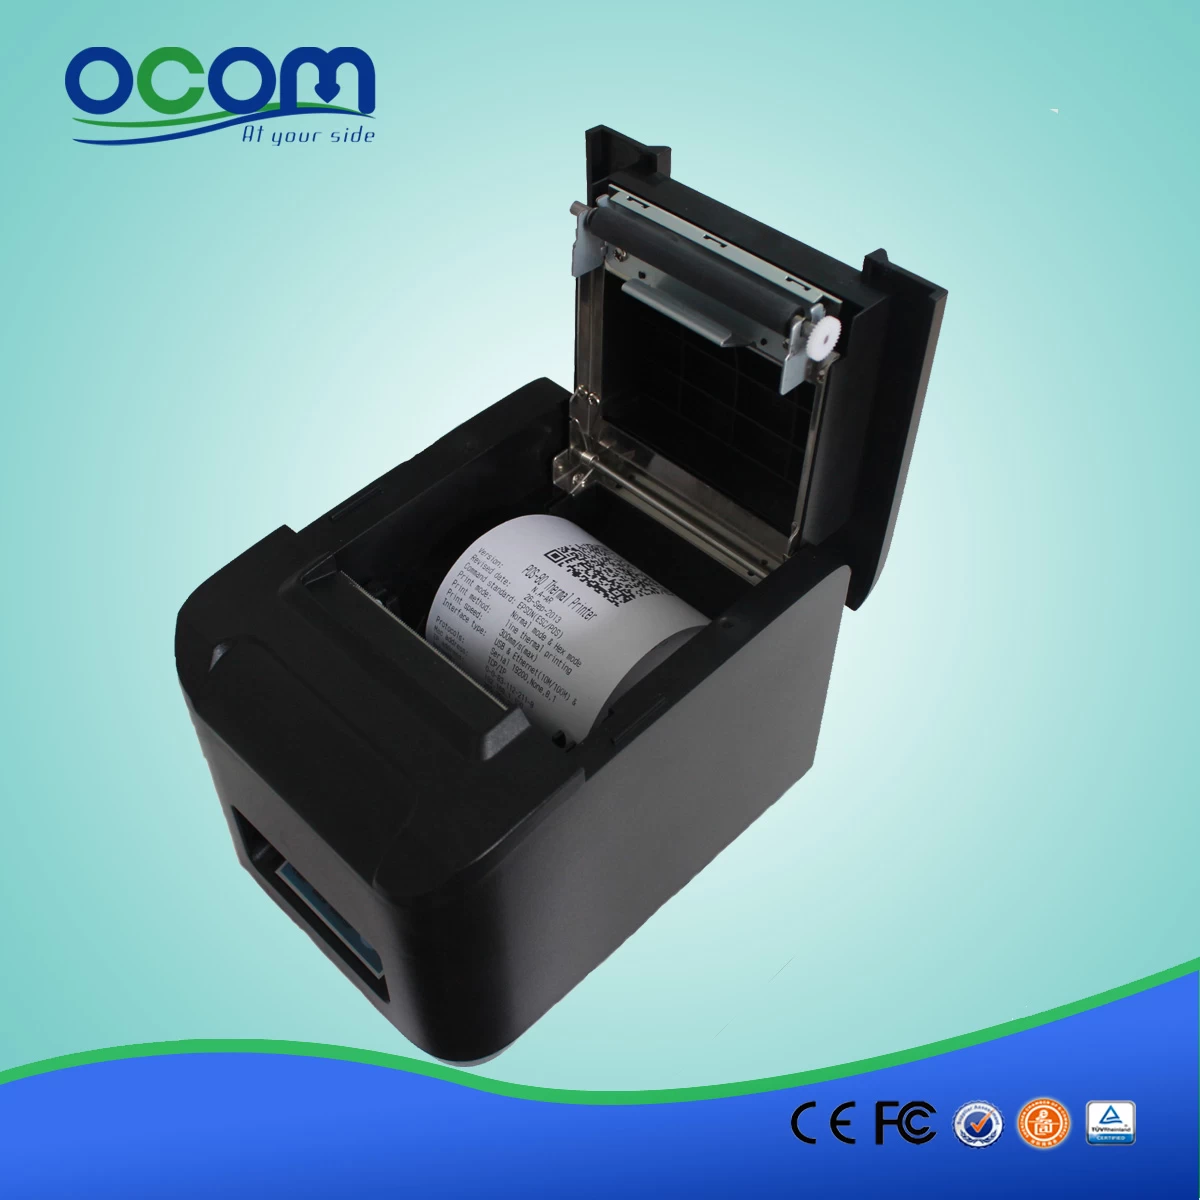 China 80mm high quality POS receipt printer-OCPP-808-URL